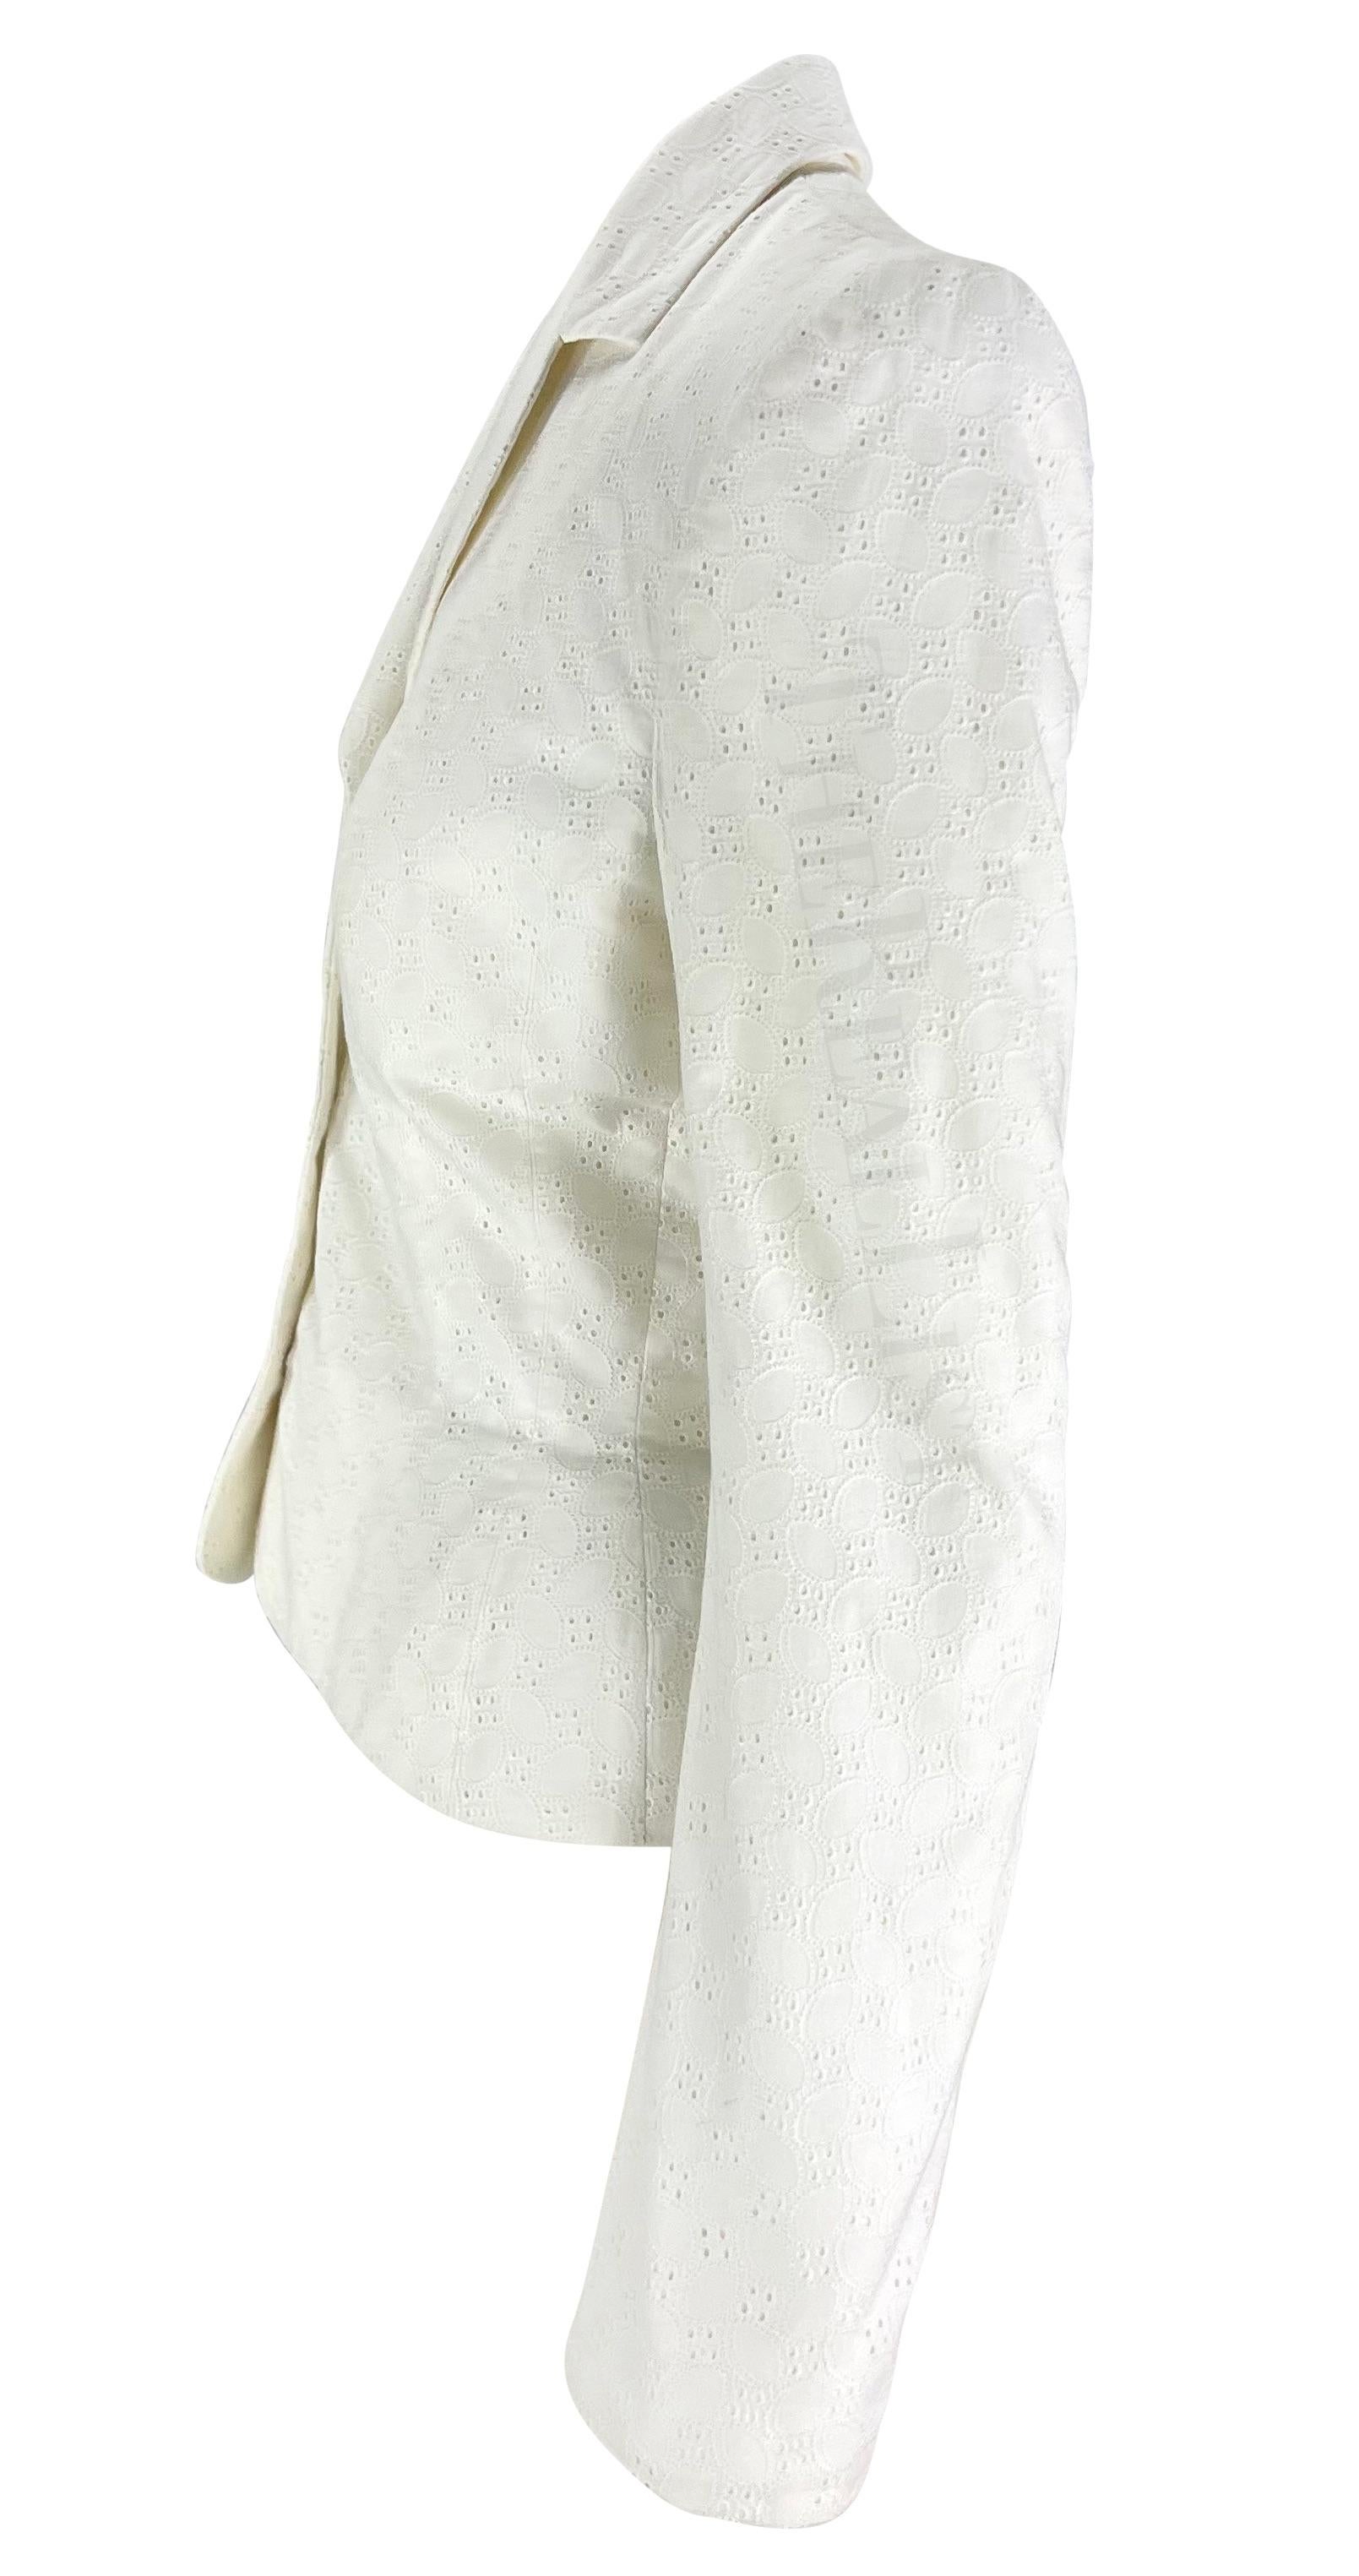 Women's S/S 1996 John Galliano Paris Broderie Anglaise Ballet Peplum White Jacket Blazer For Sale